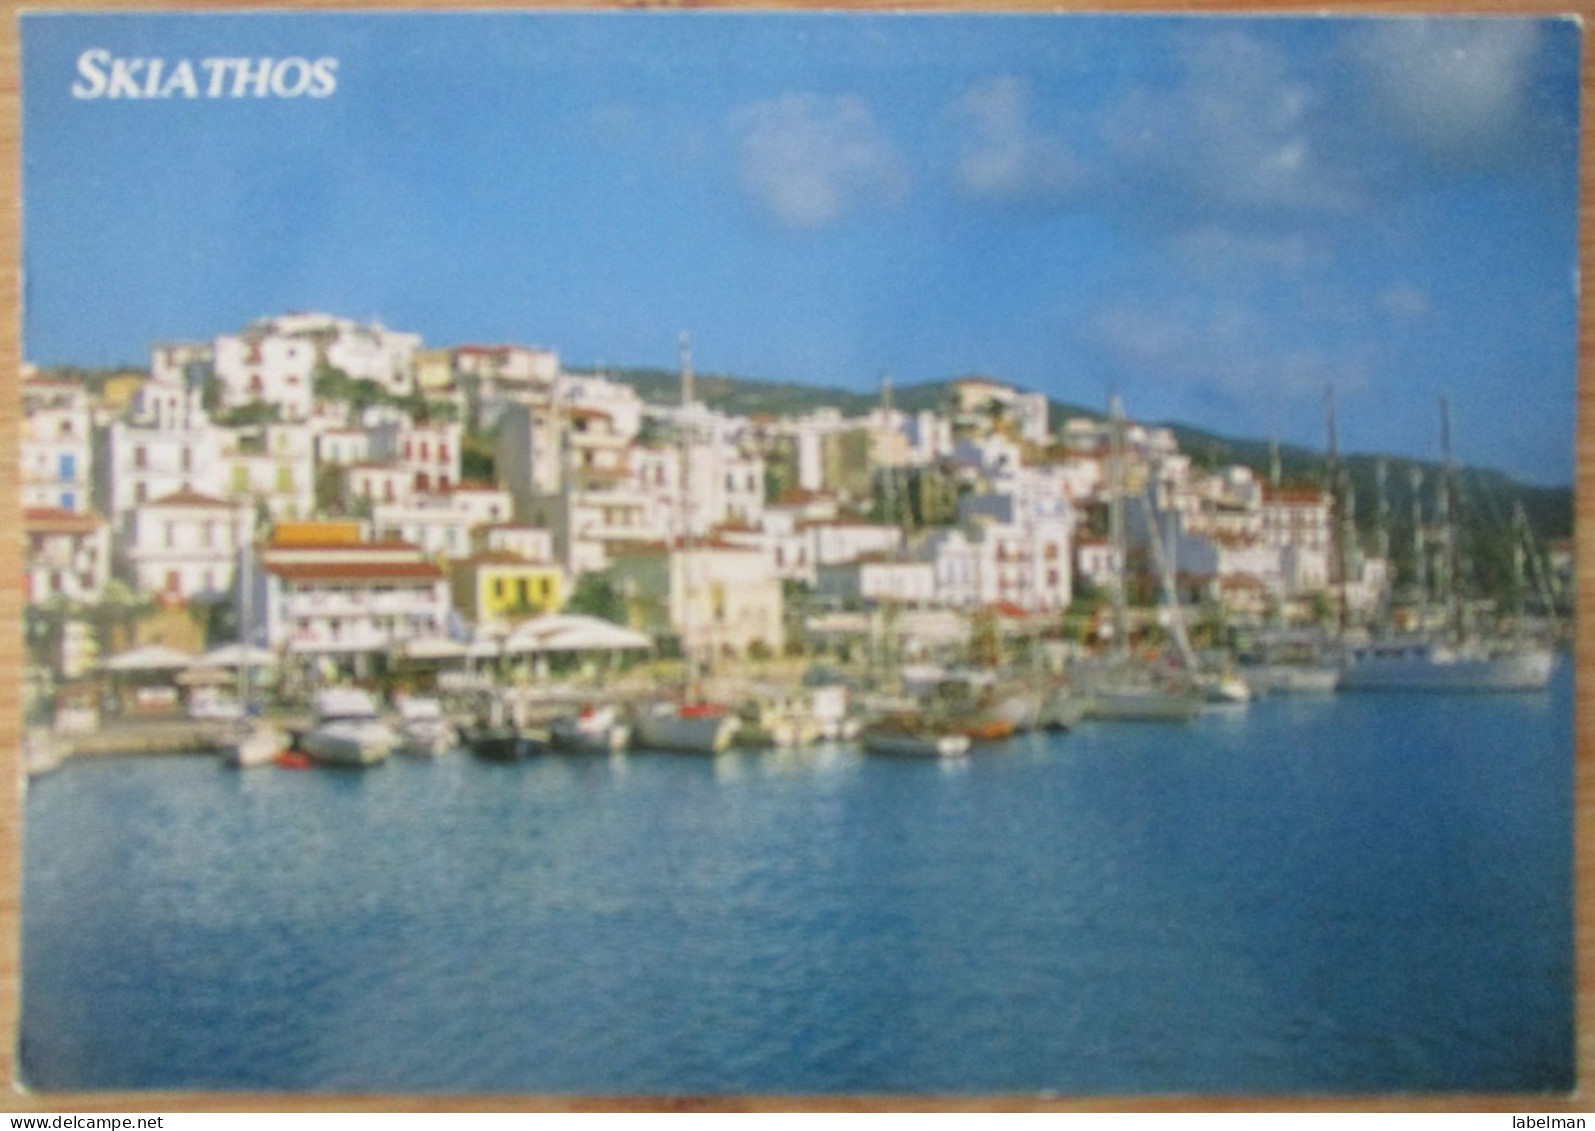 GREECE SKIATHOS TYPICAL ISLAND VILLAGE HOUSE POSTCARD ANSICHTSKARTE CARTOLINA CARTE POSTALE POSTKARTE KARTE  CARD - Griechenland